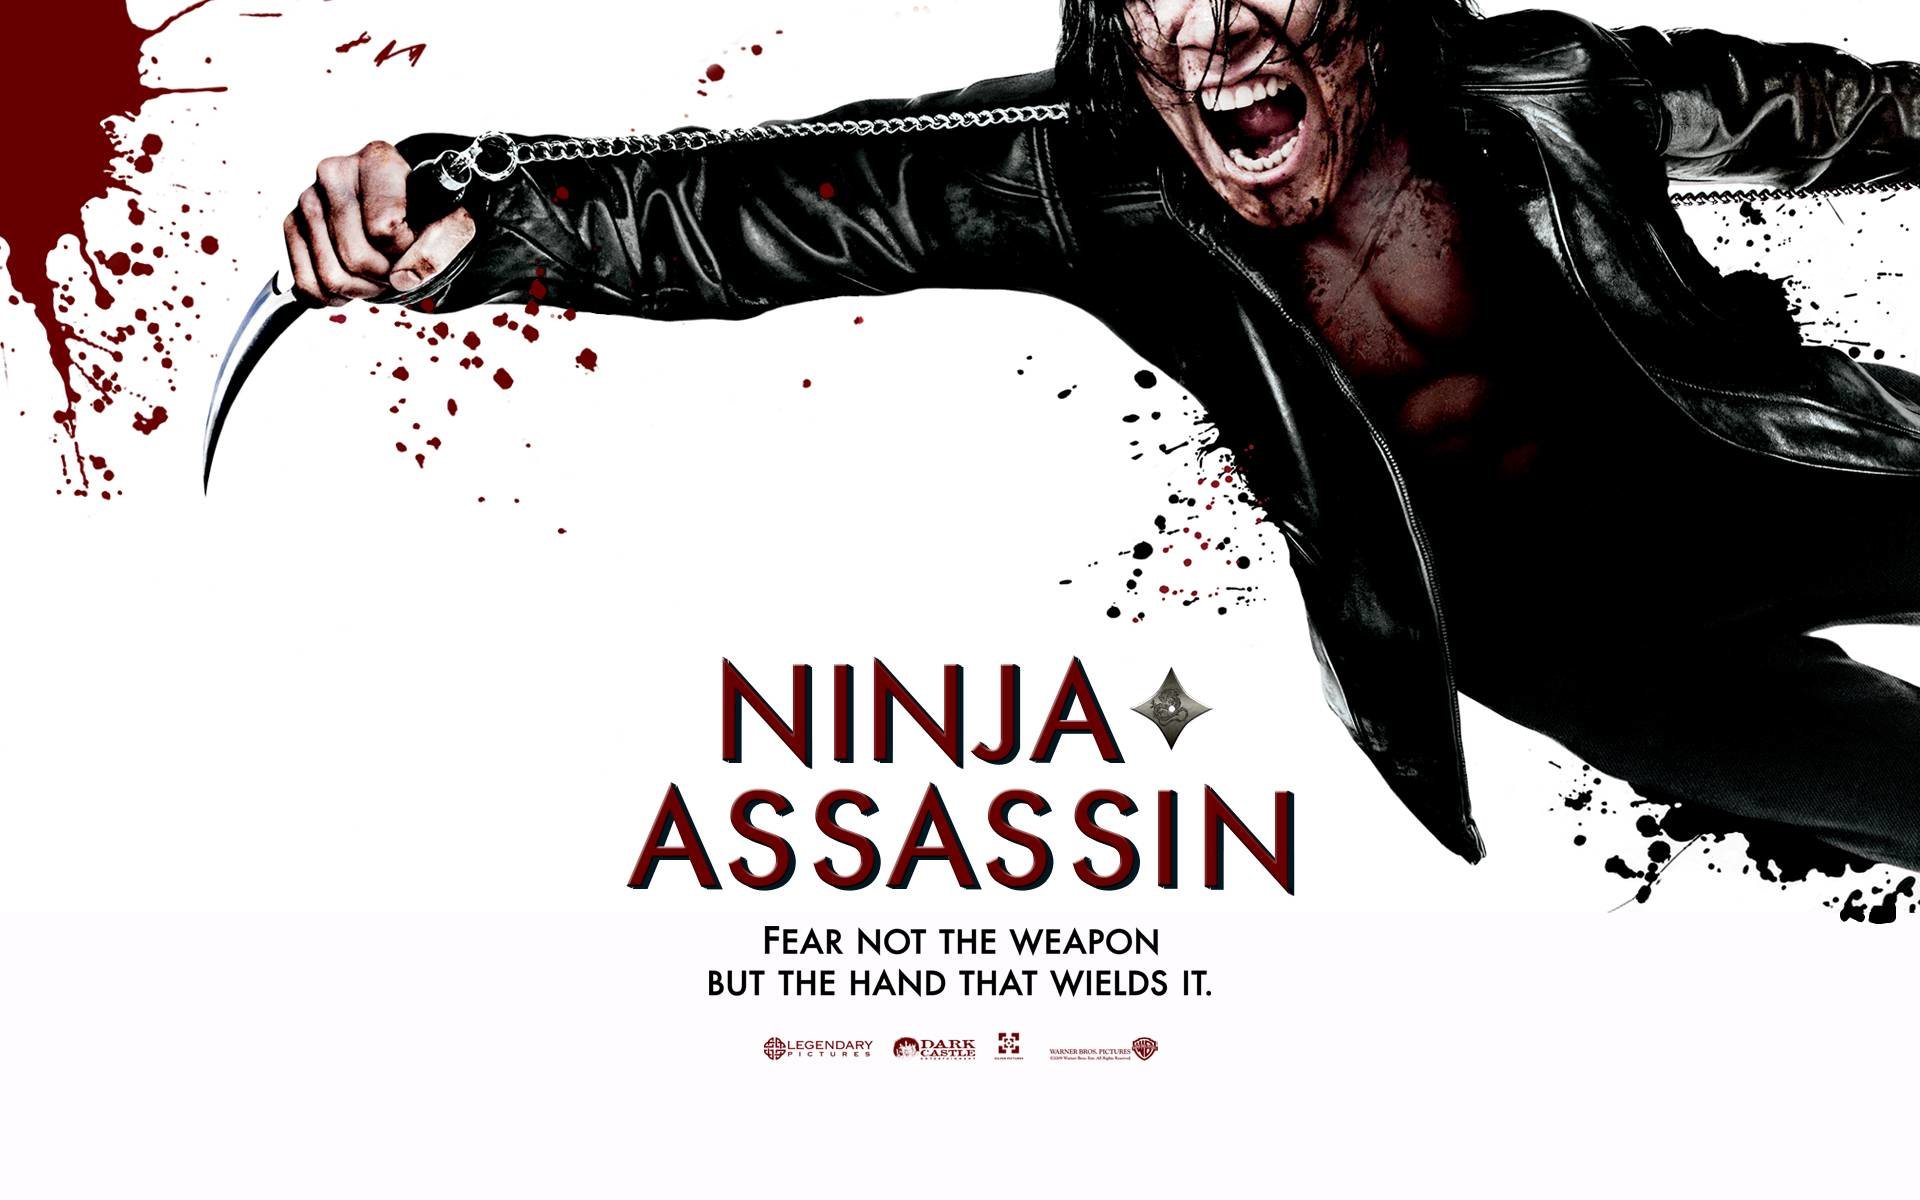 Best Ninja Assassin wallpaper ID:469506 for High Resolution hd 1920x1200 computer